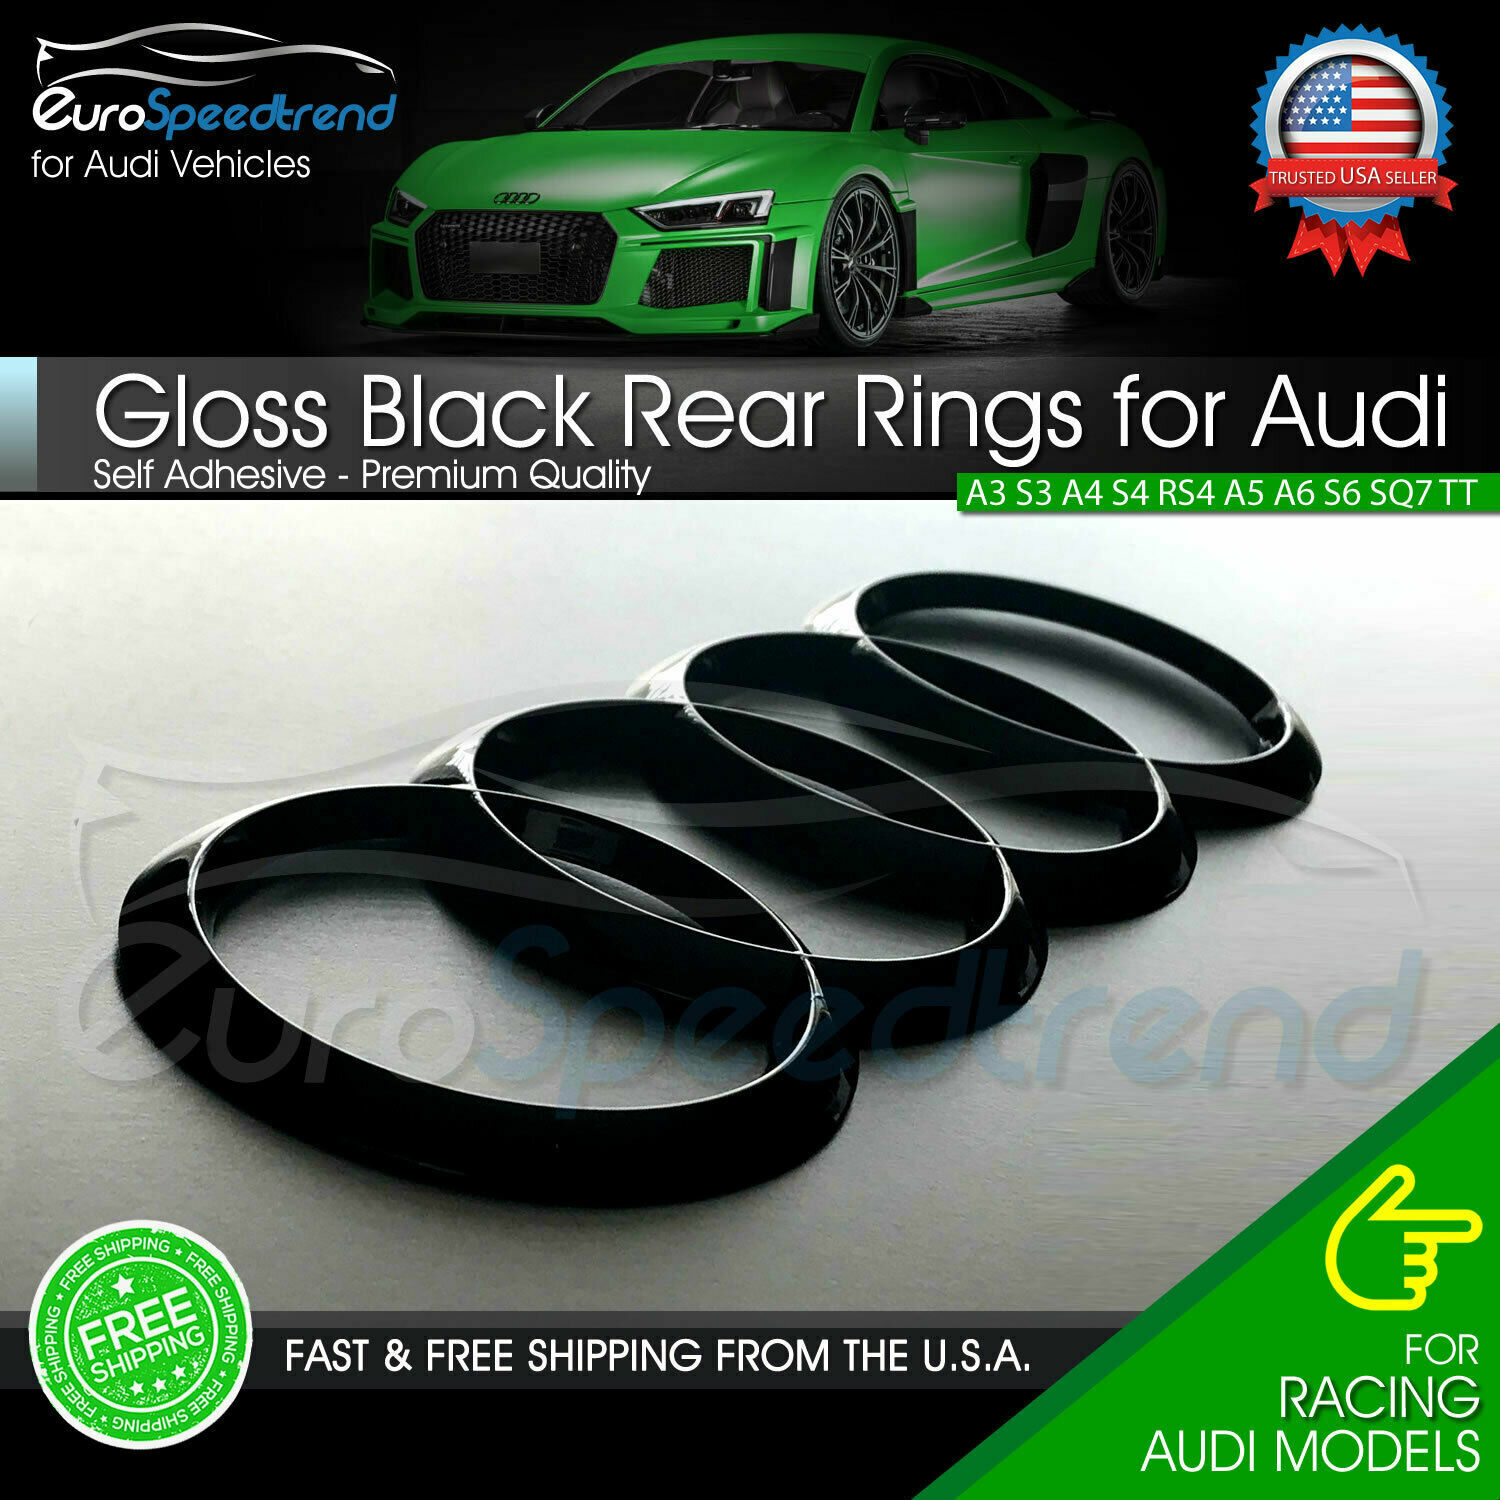 AUDI Rings Gloss Black Rear Trunk Lid Badge Logo Emblem for A1 A3 A4 S4 A5 S6 A6